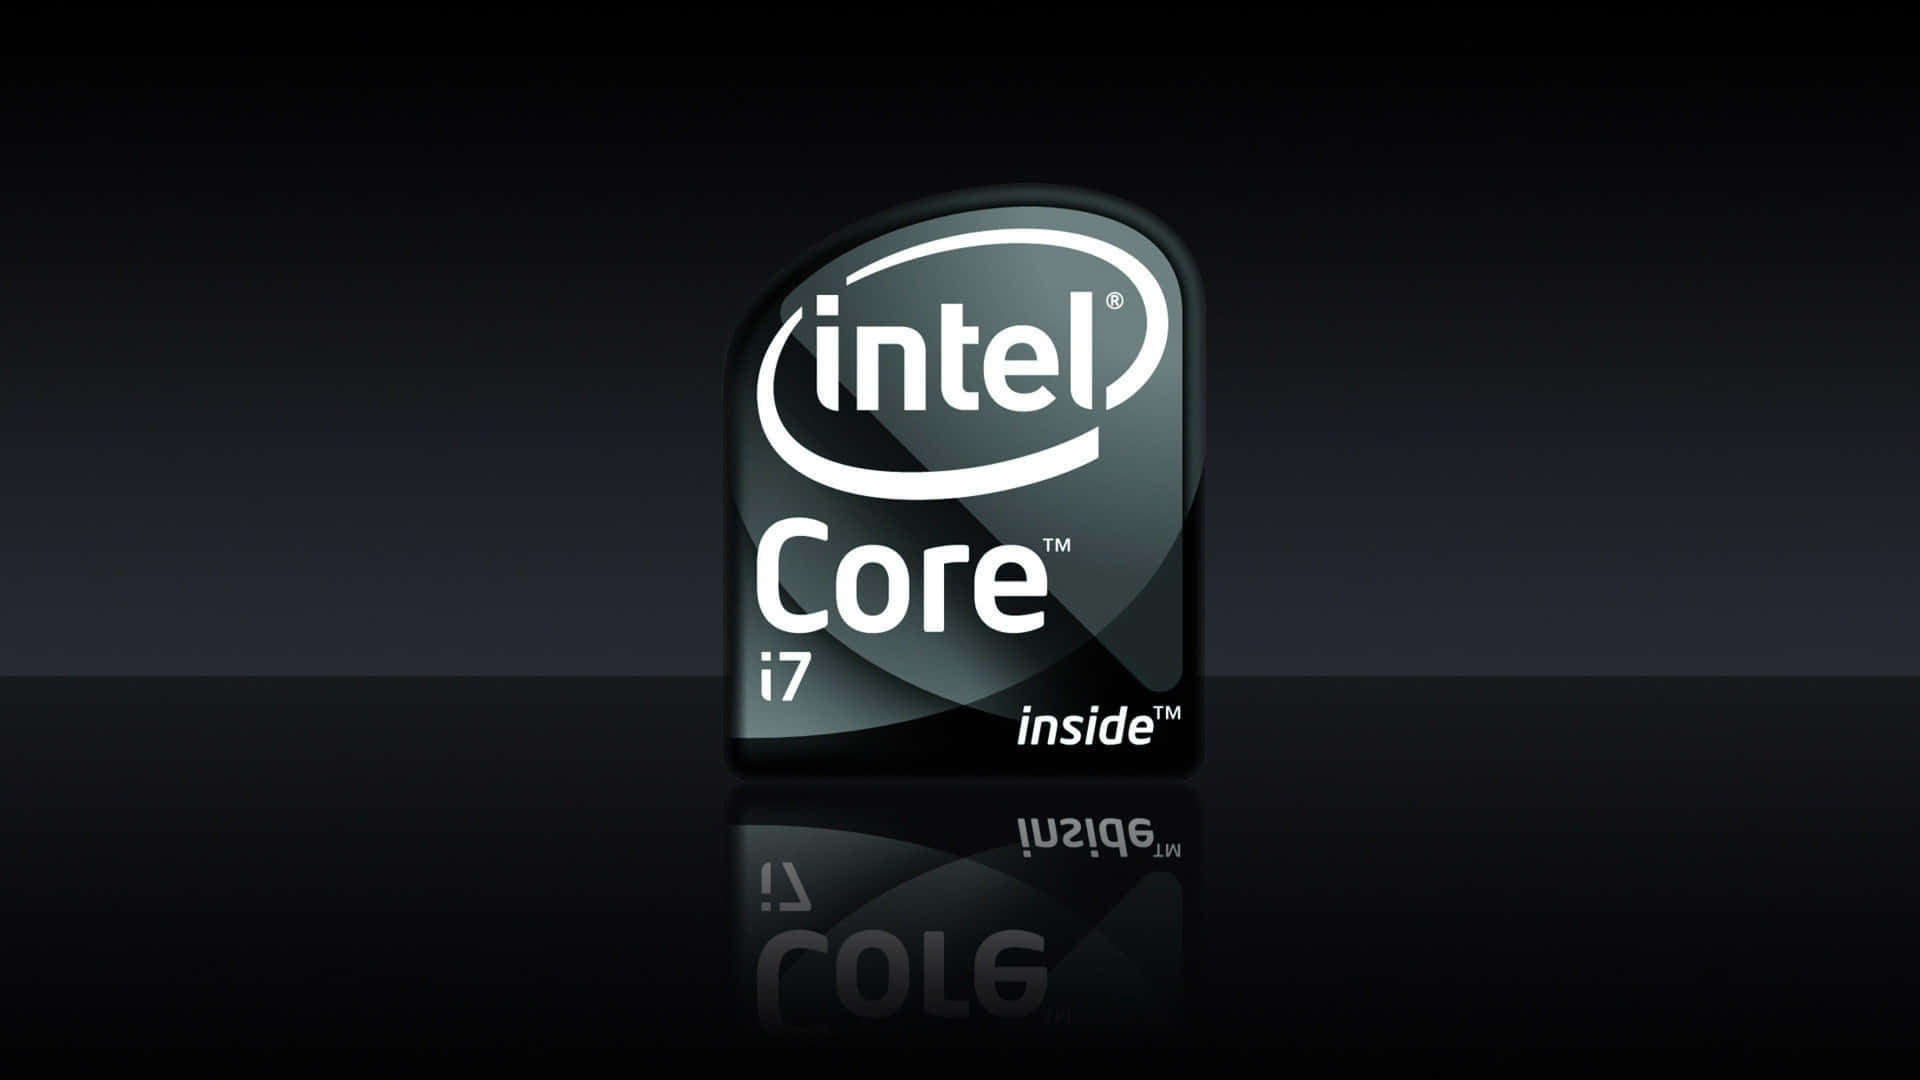 Intel Corei7 Processor Badge Wallpaper